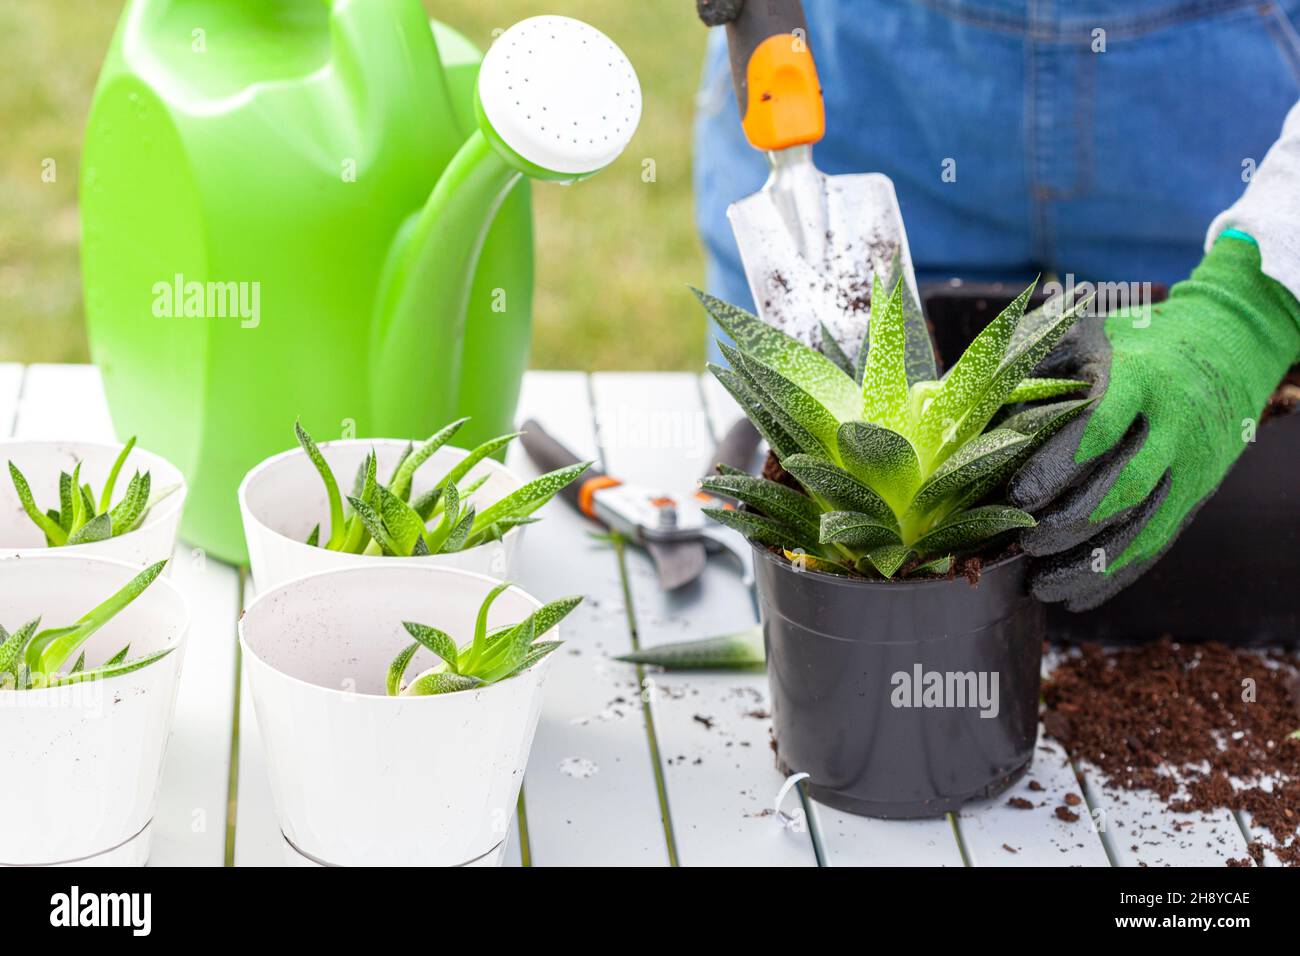 A woman gardener wearing overalls is planting new haworthia fasciata houseplants using potting soil, hand shovel and gloves. Hobby, green finger, gard Stock Photo